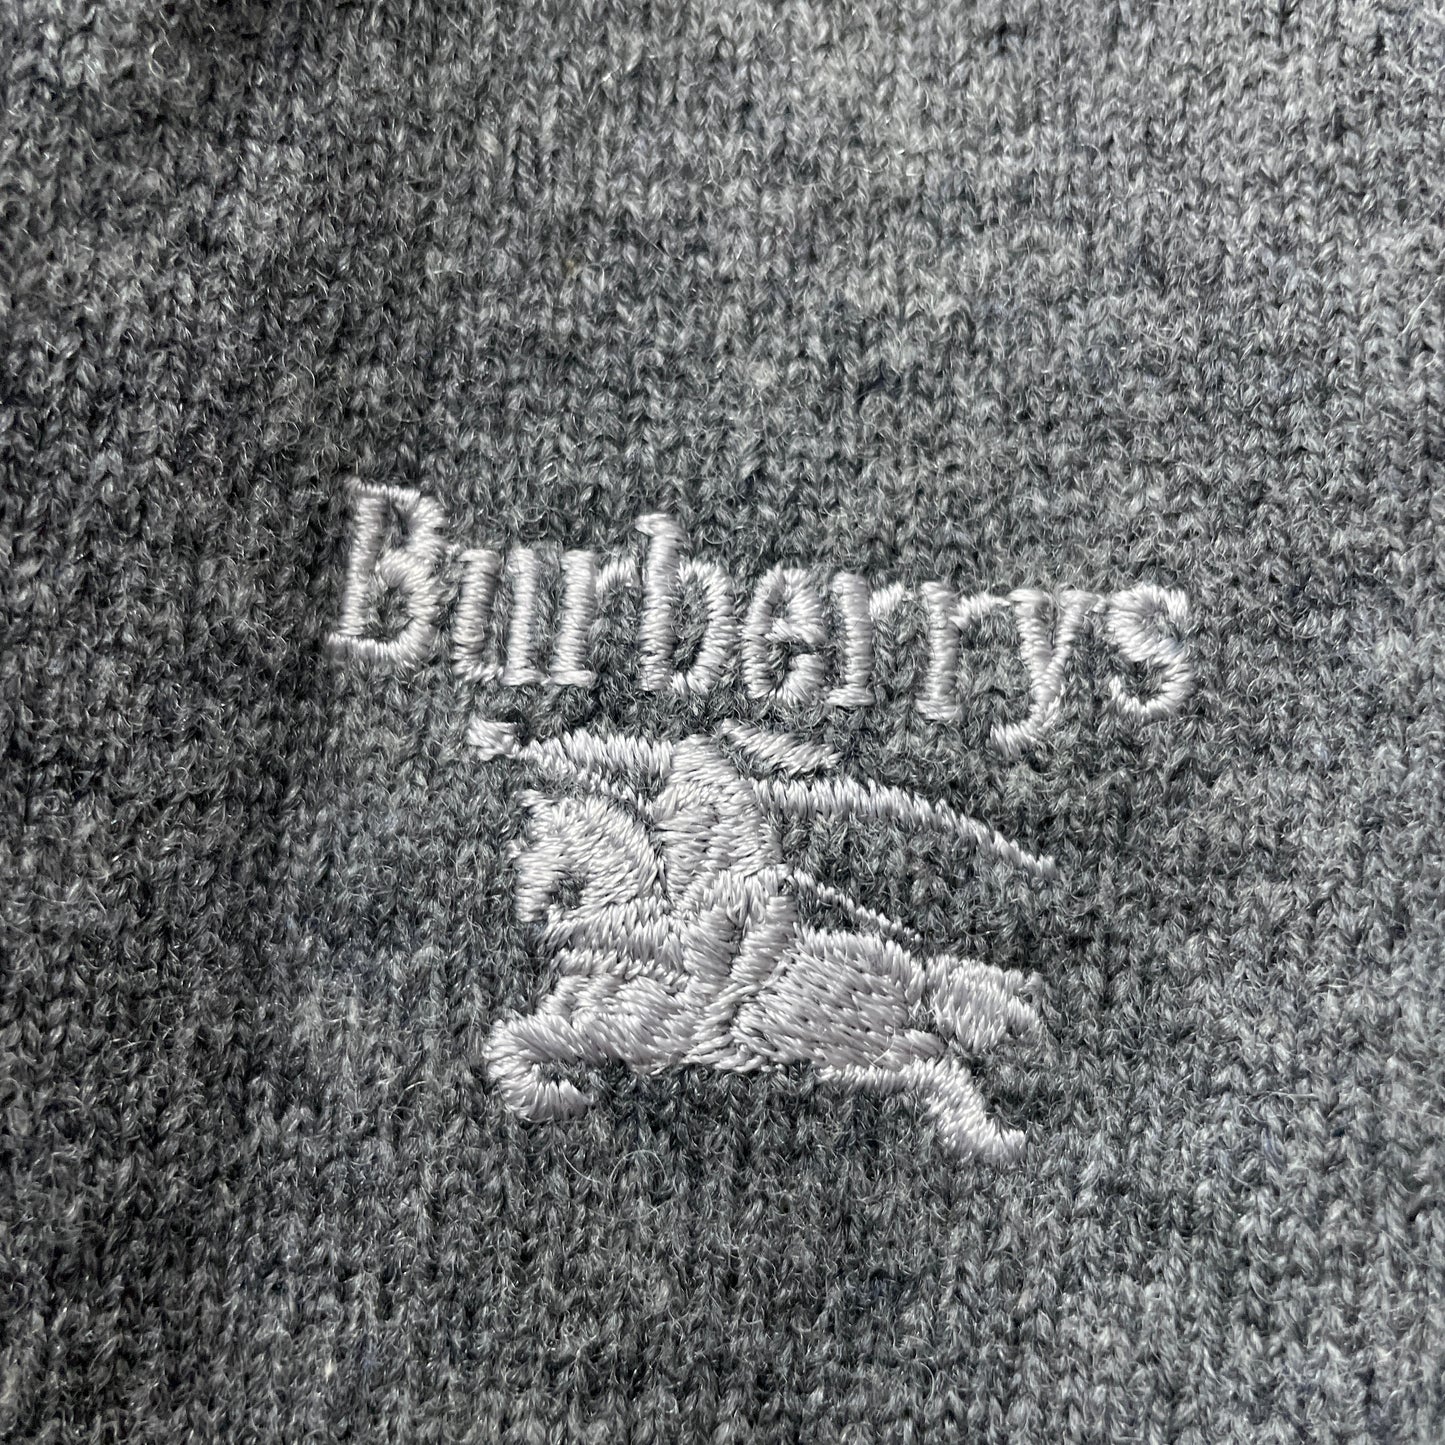 Burberrys cardigan